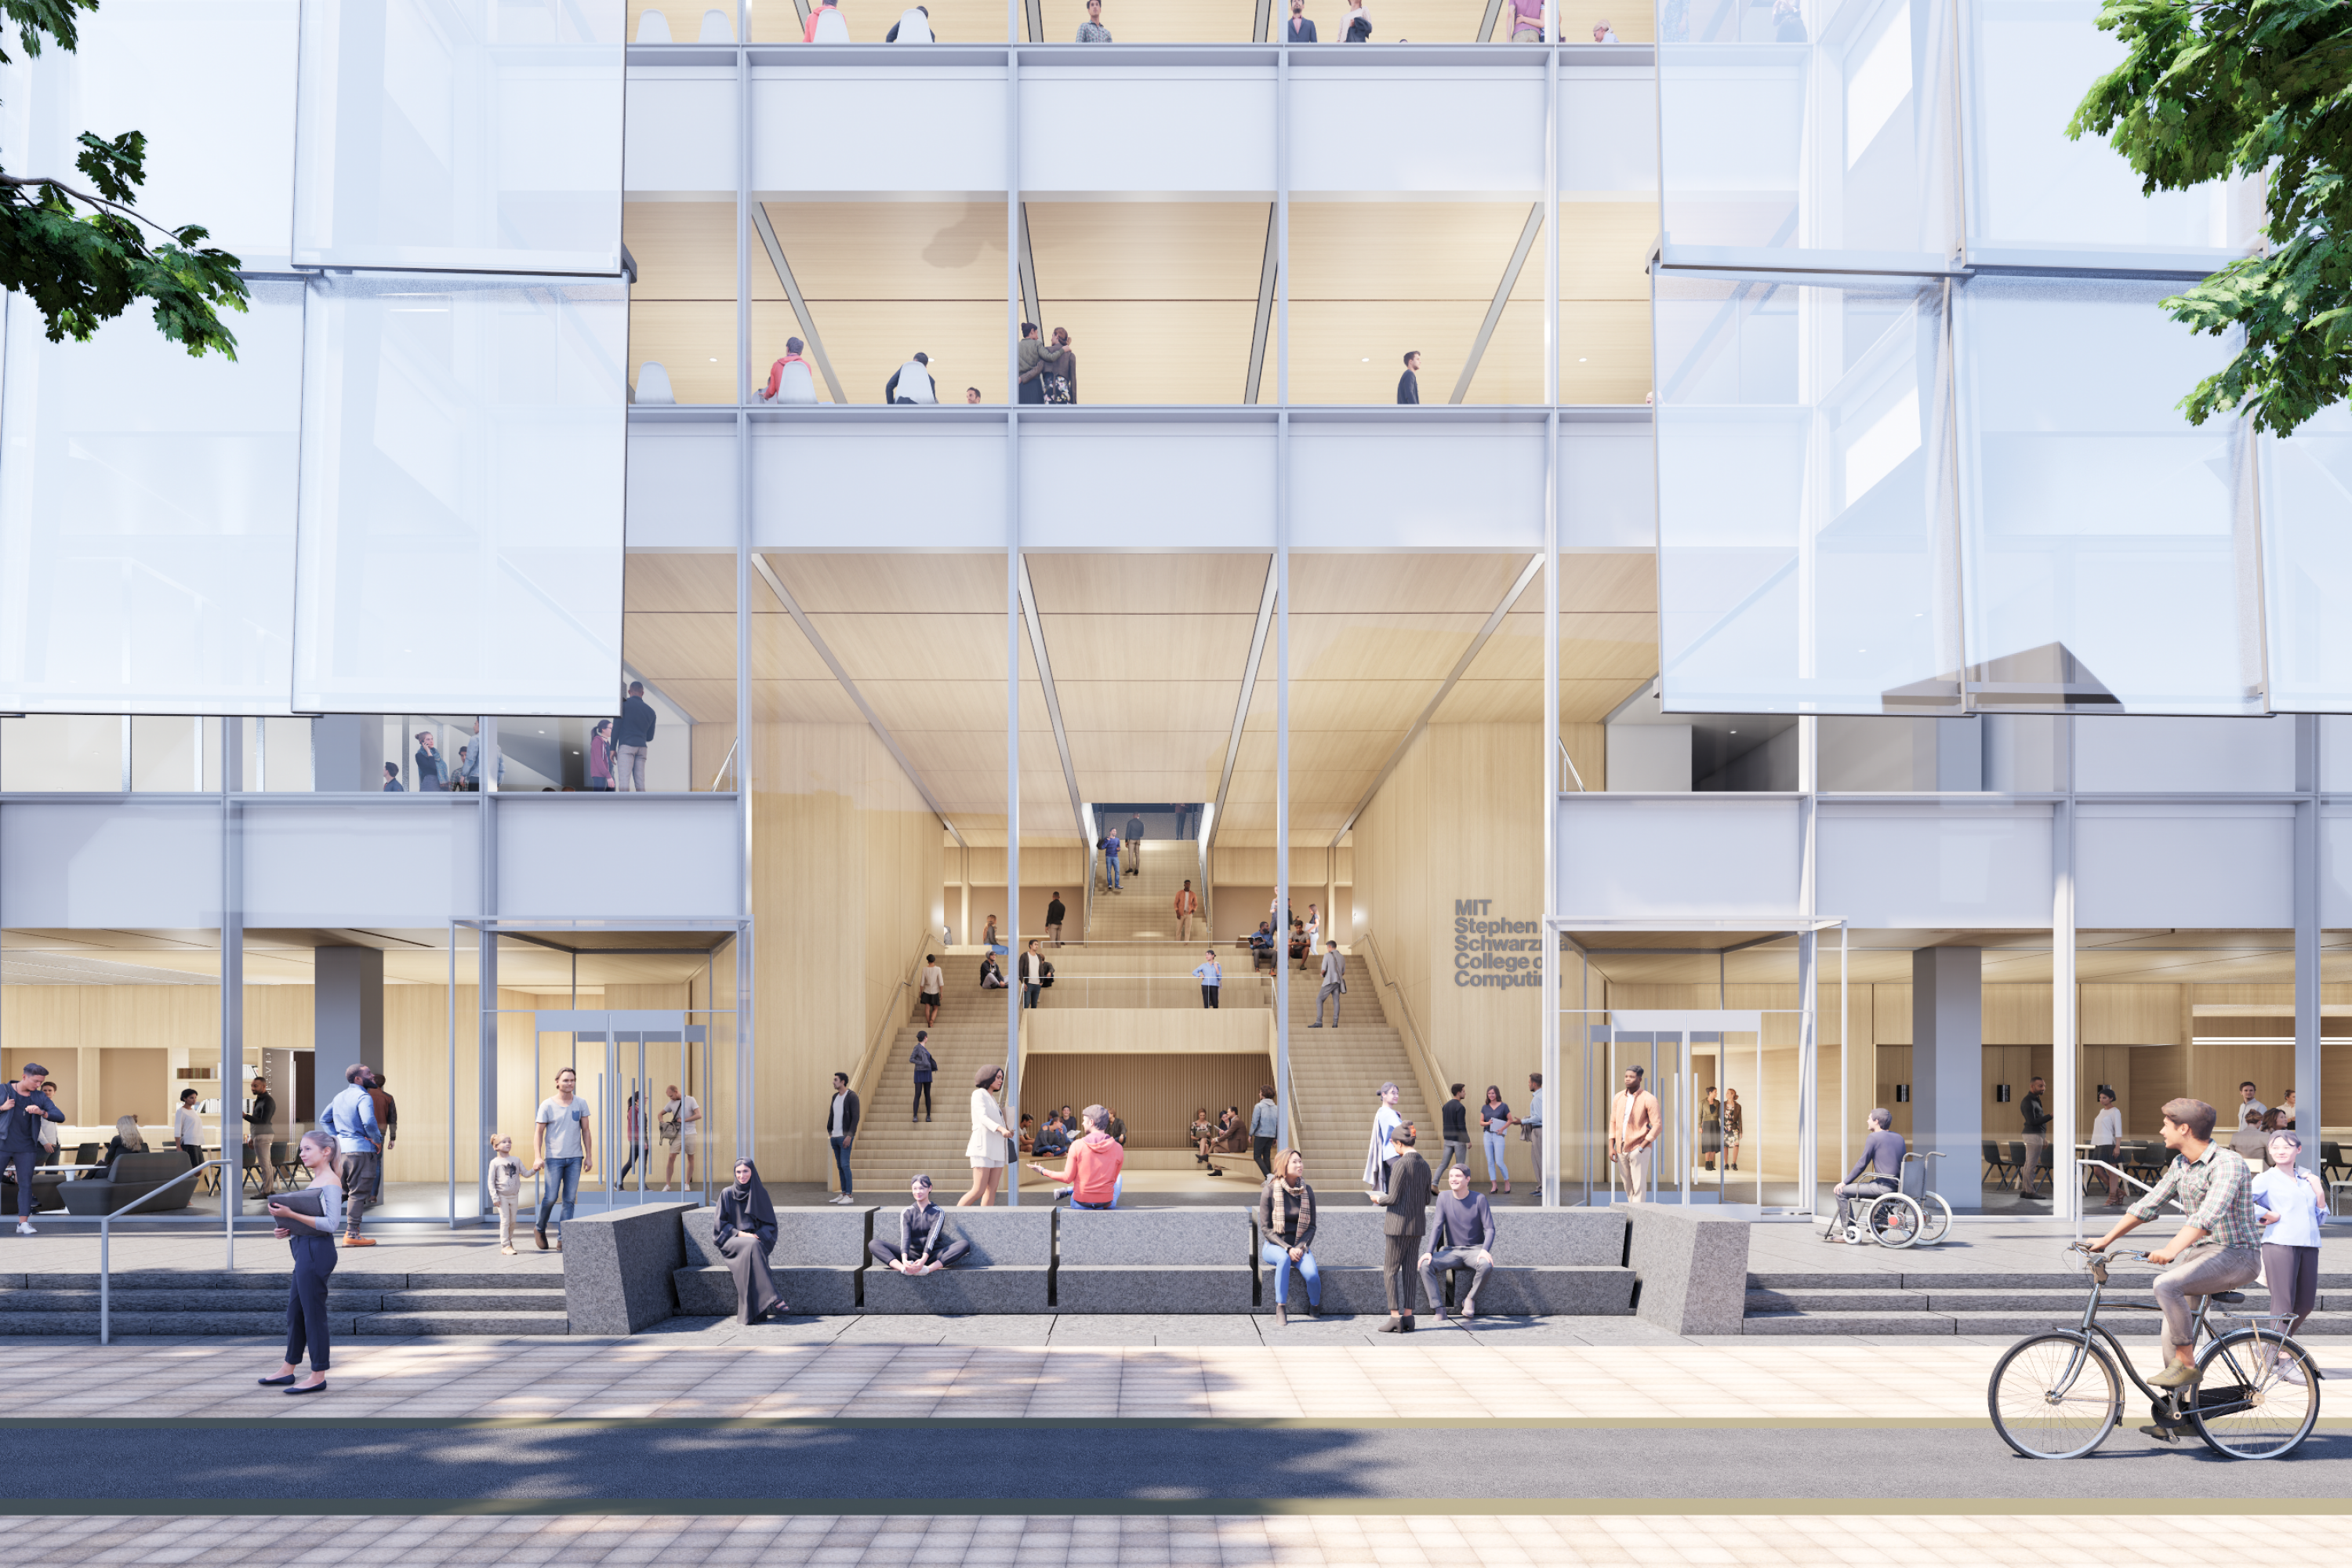 Design progresses for MIT Schwarzman College of Computing building on Vassar Street